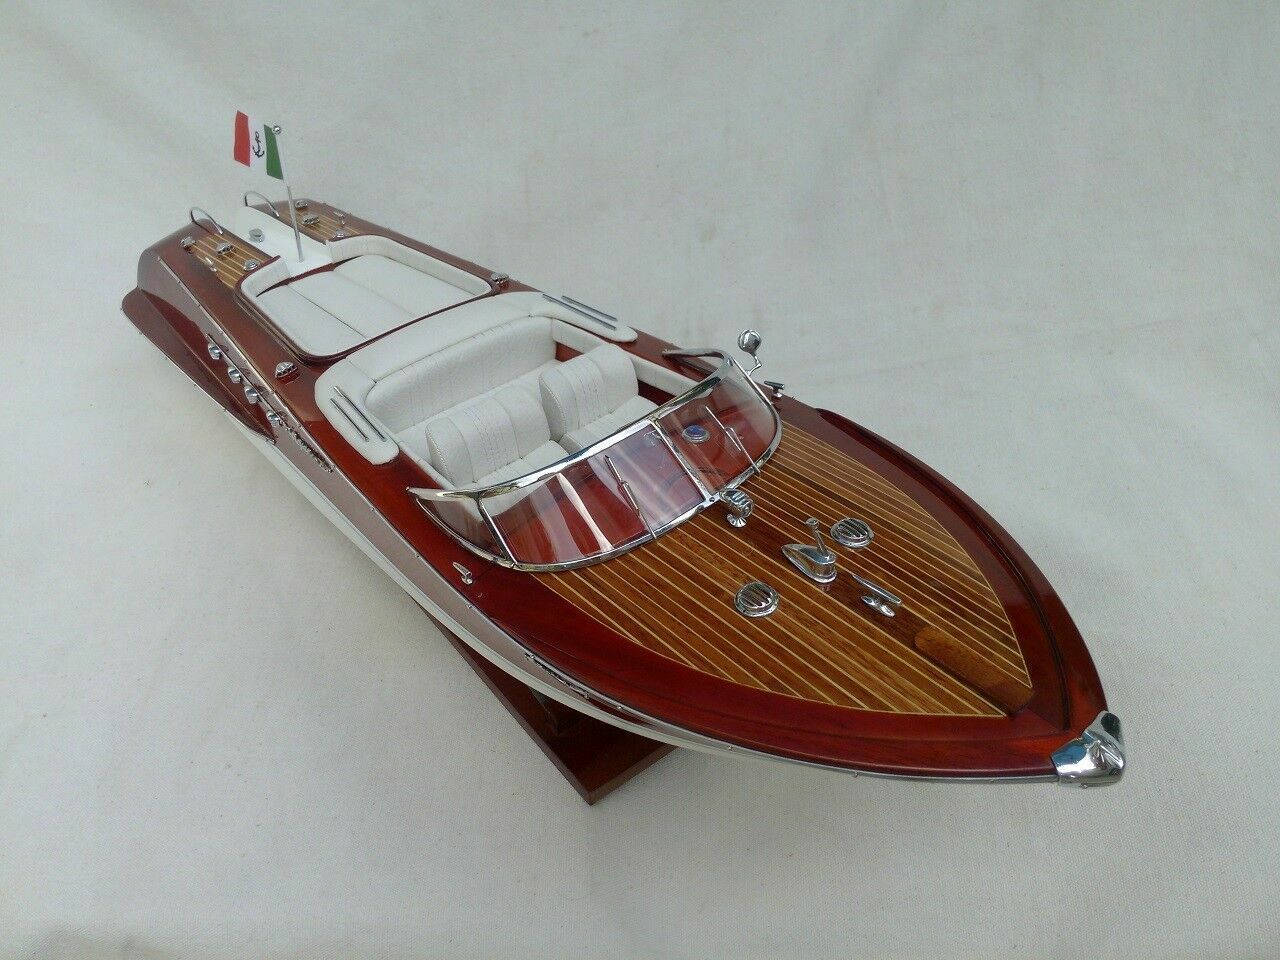 model riva boat Riva Aquarama cream 87cm entirely brass wood modeling